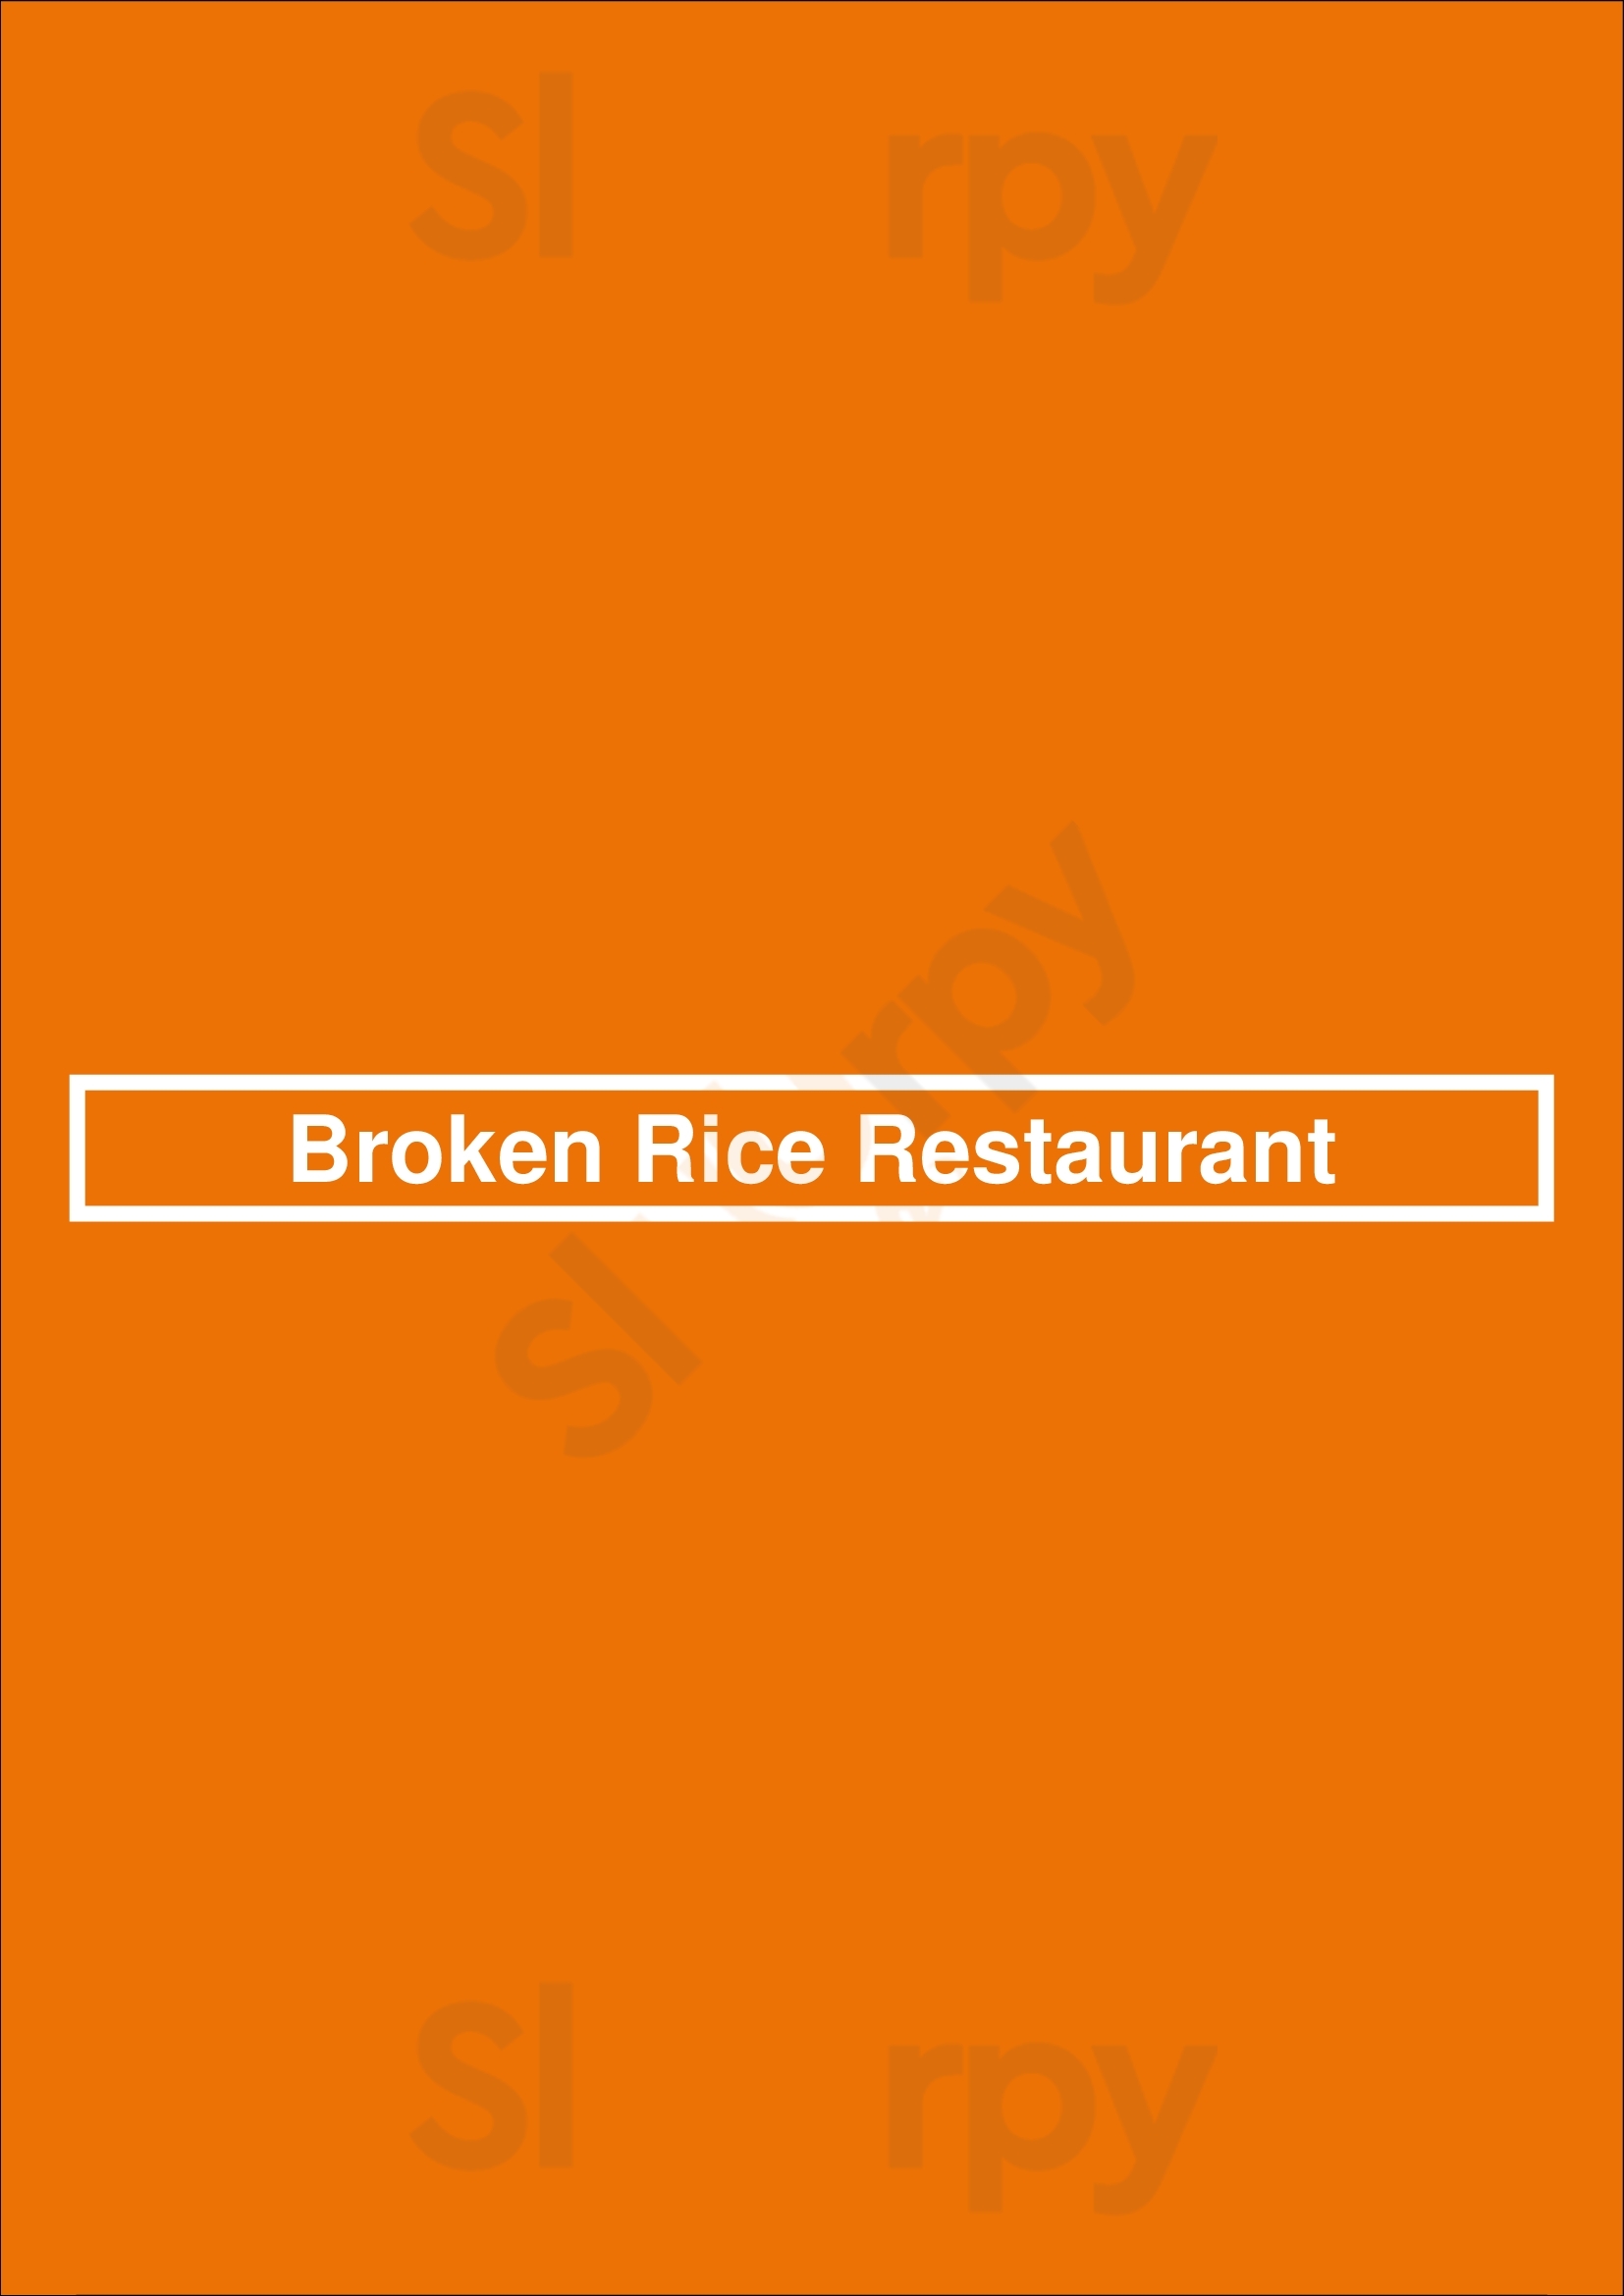 Broken Rice Restaurant Burnaby Menu - 1